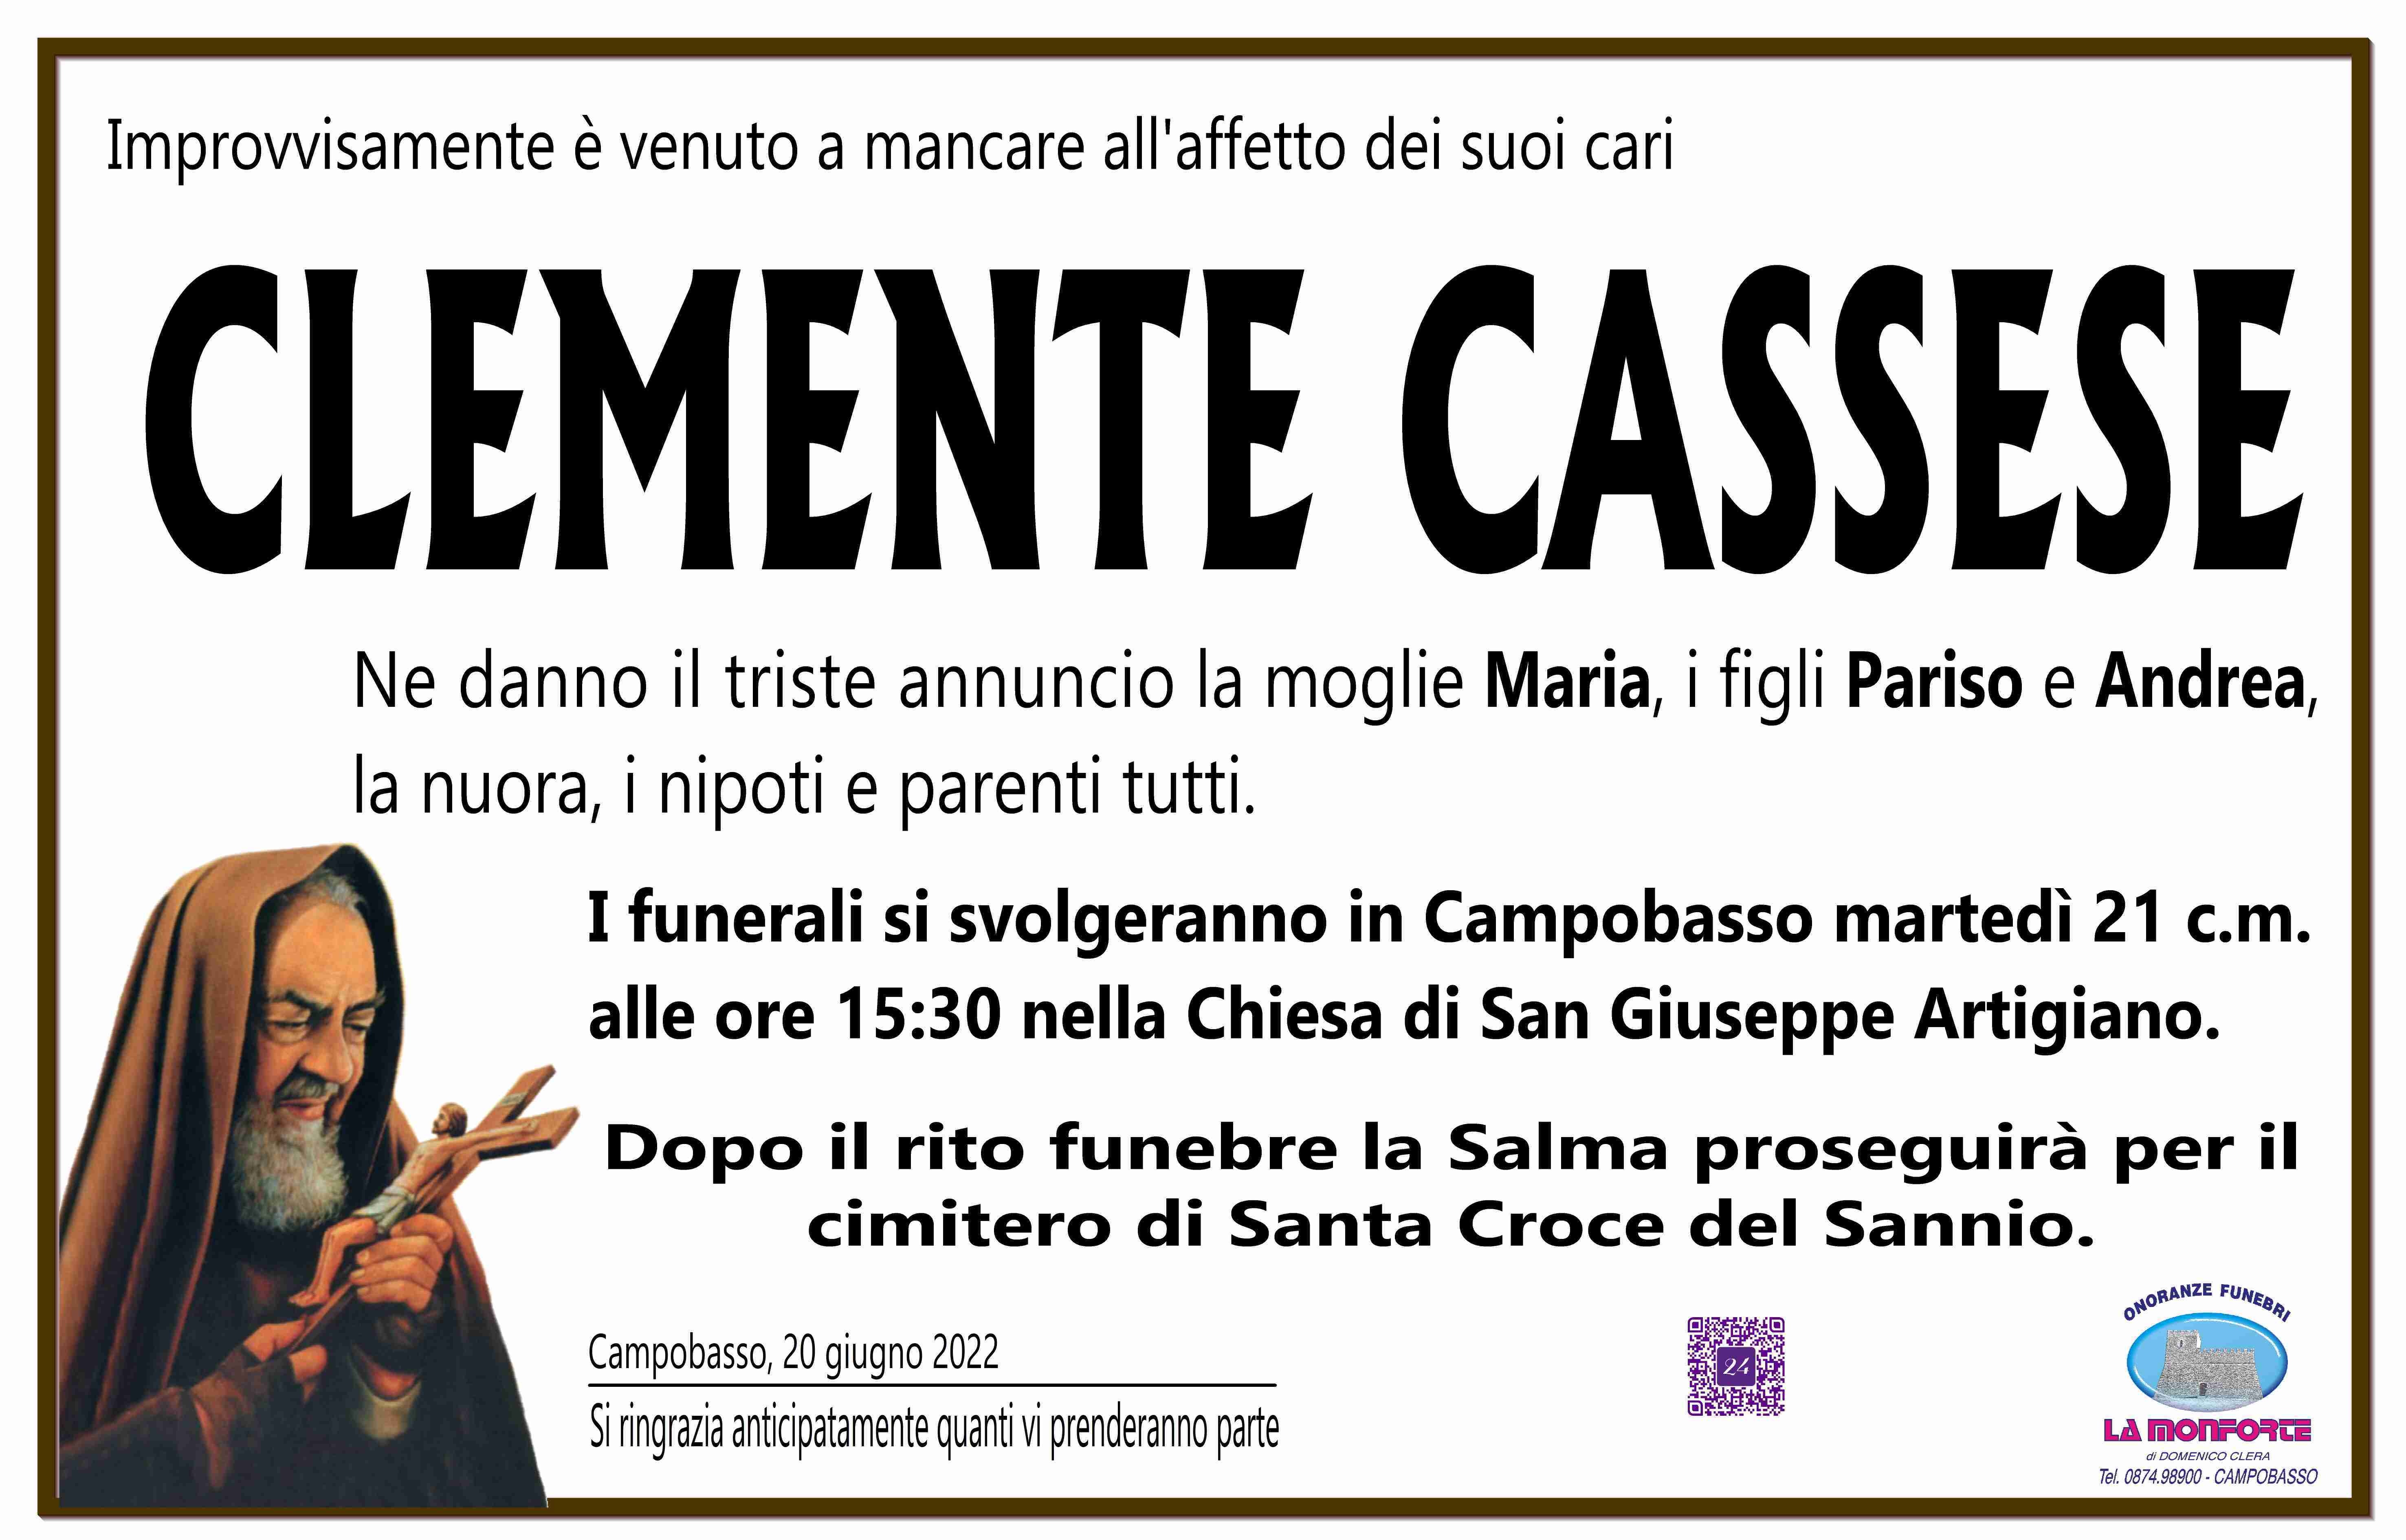 Clemente Cassese